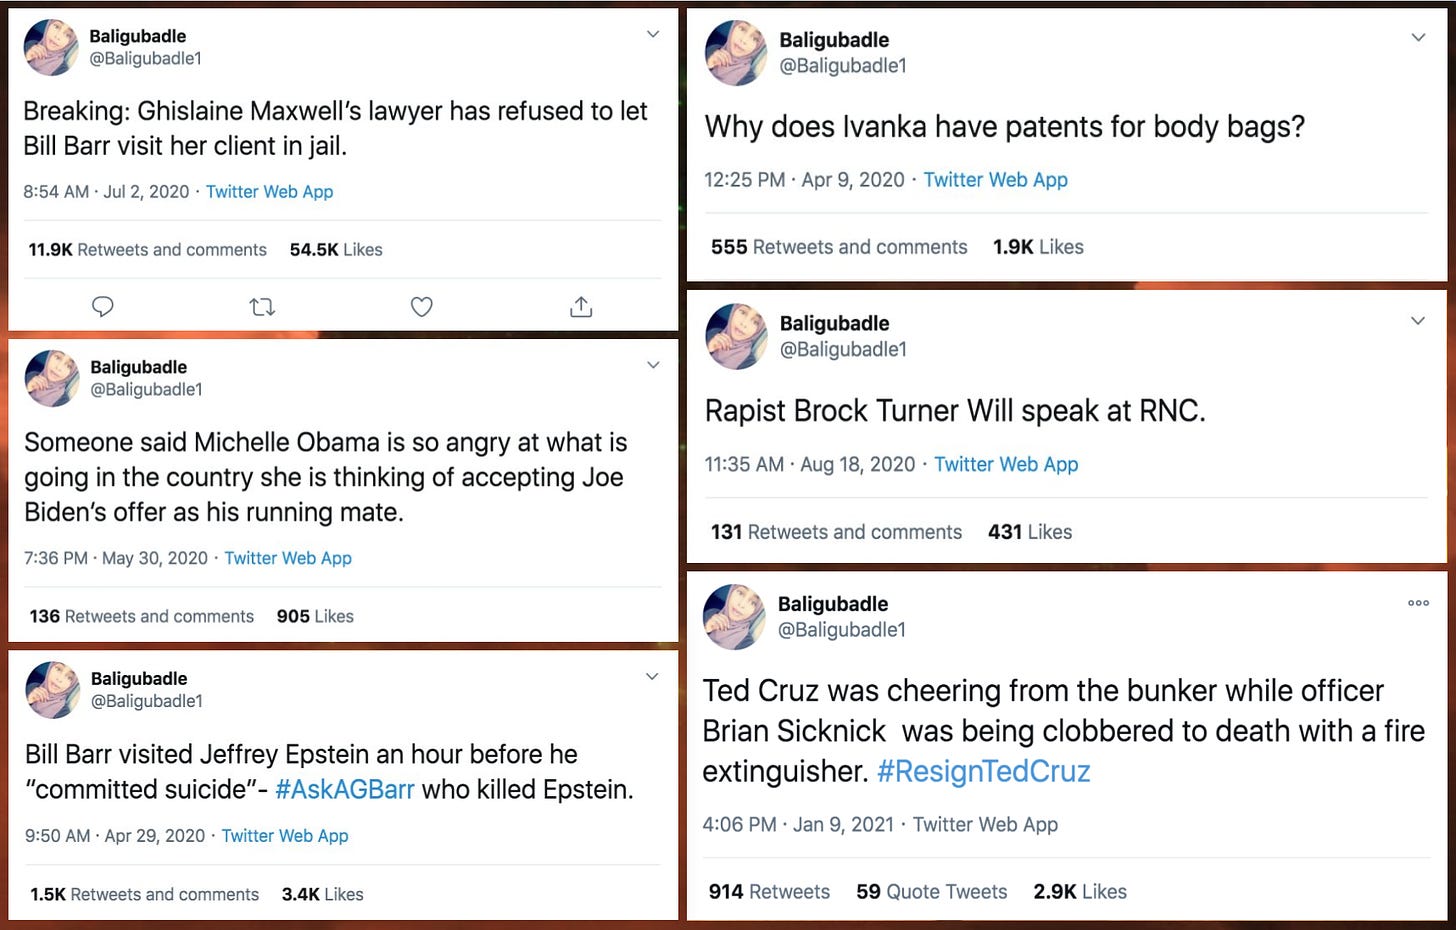 collage of misleading viral tweets from @baligubadle1